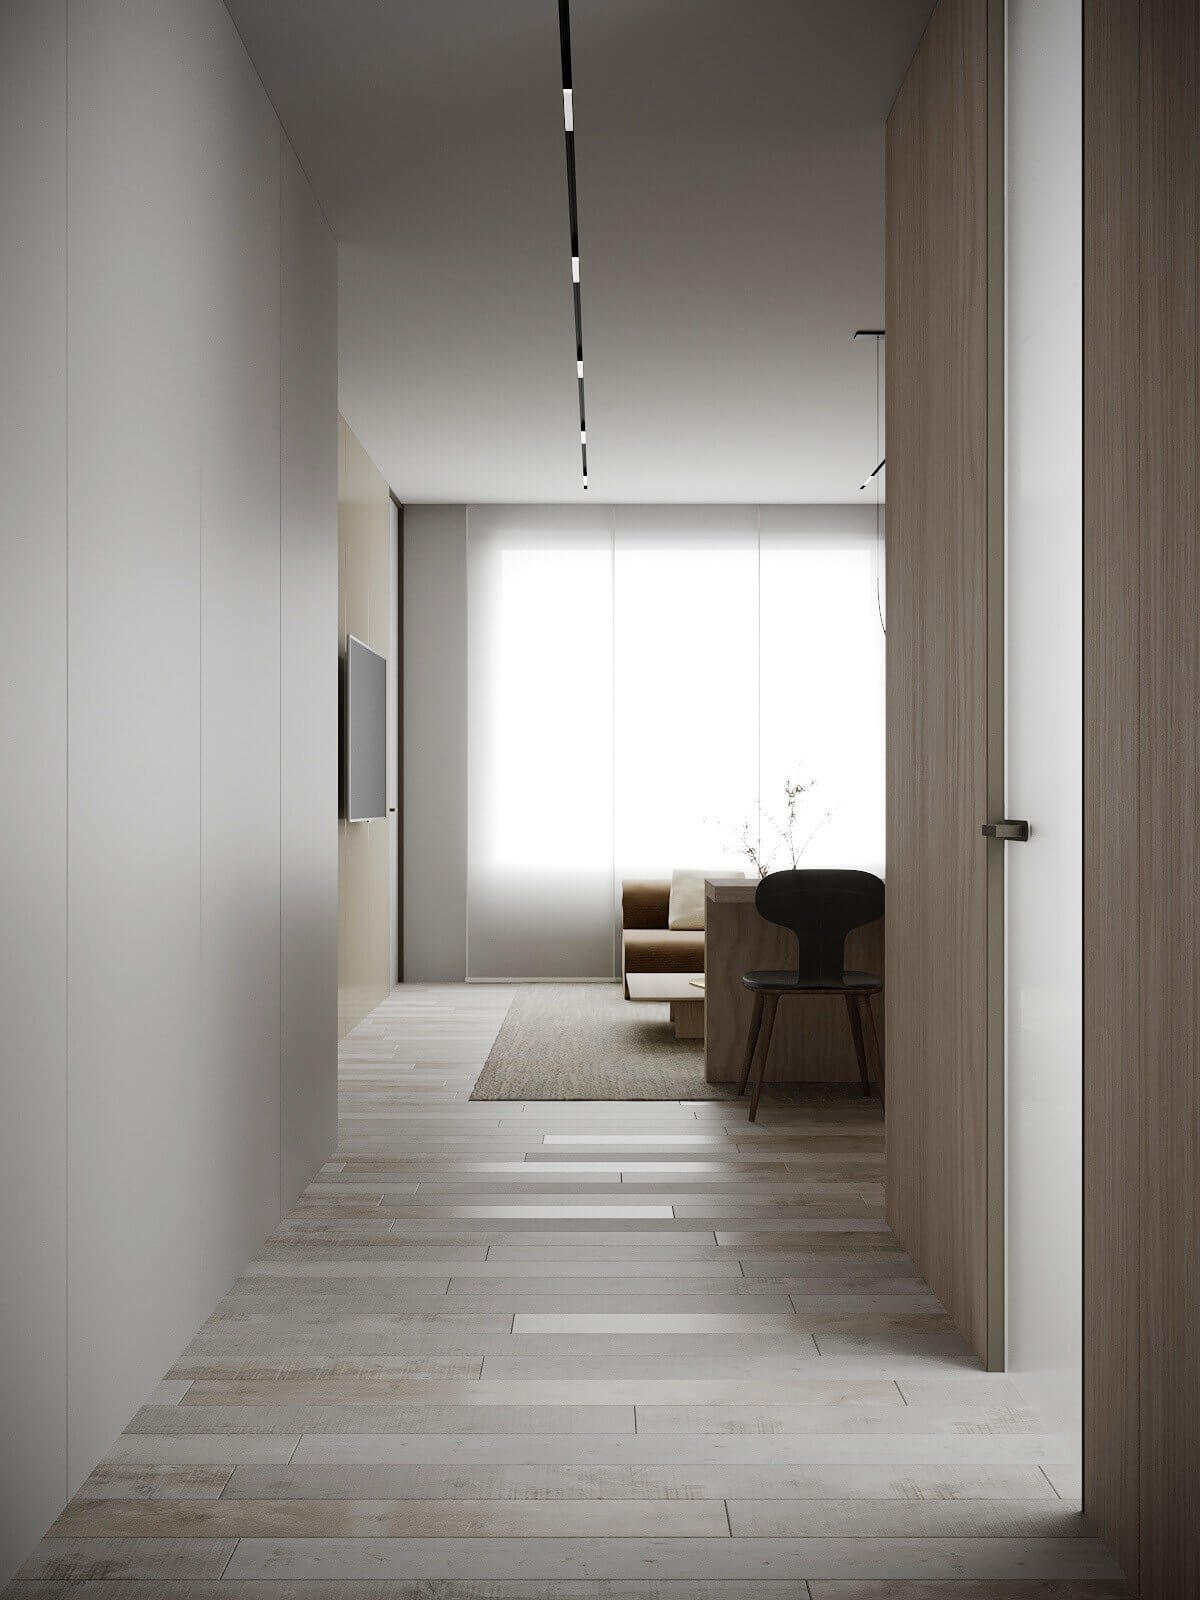 Royal Tower Apartment corridor living room - cgi visualization